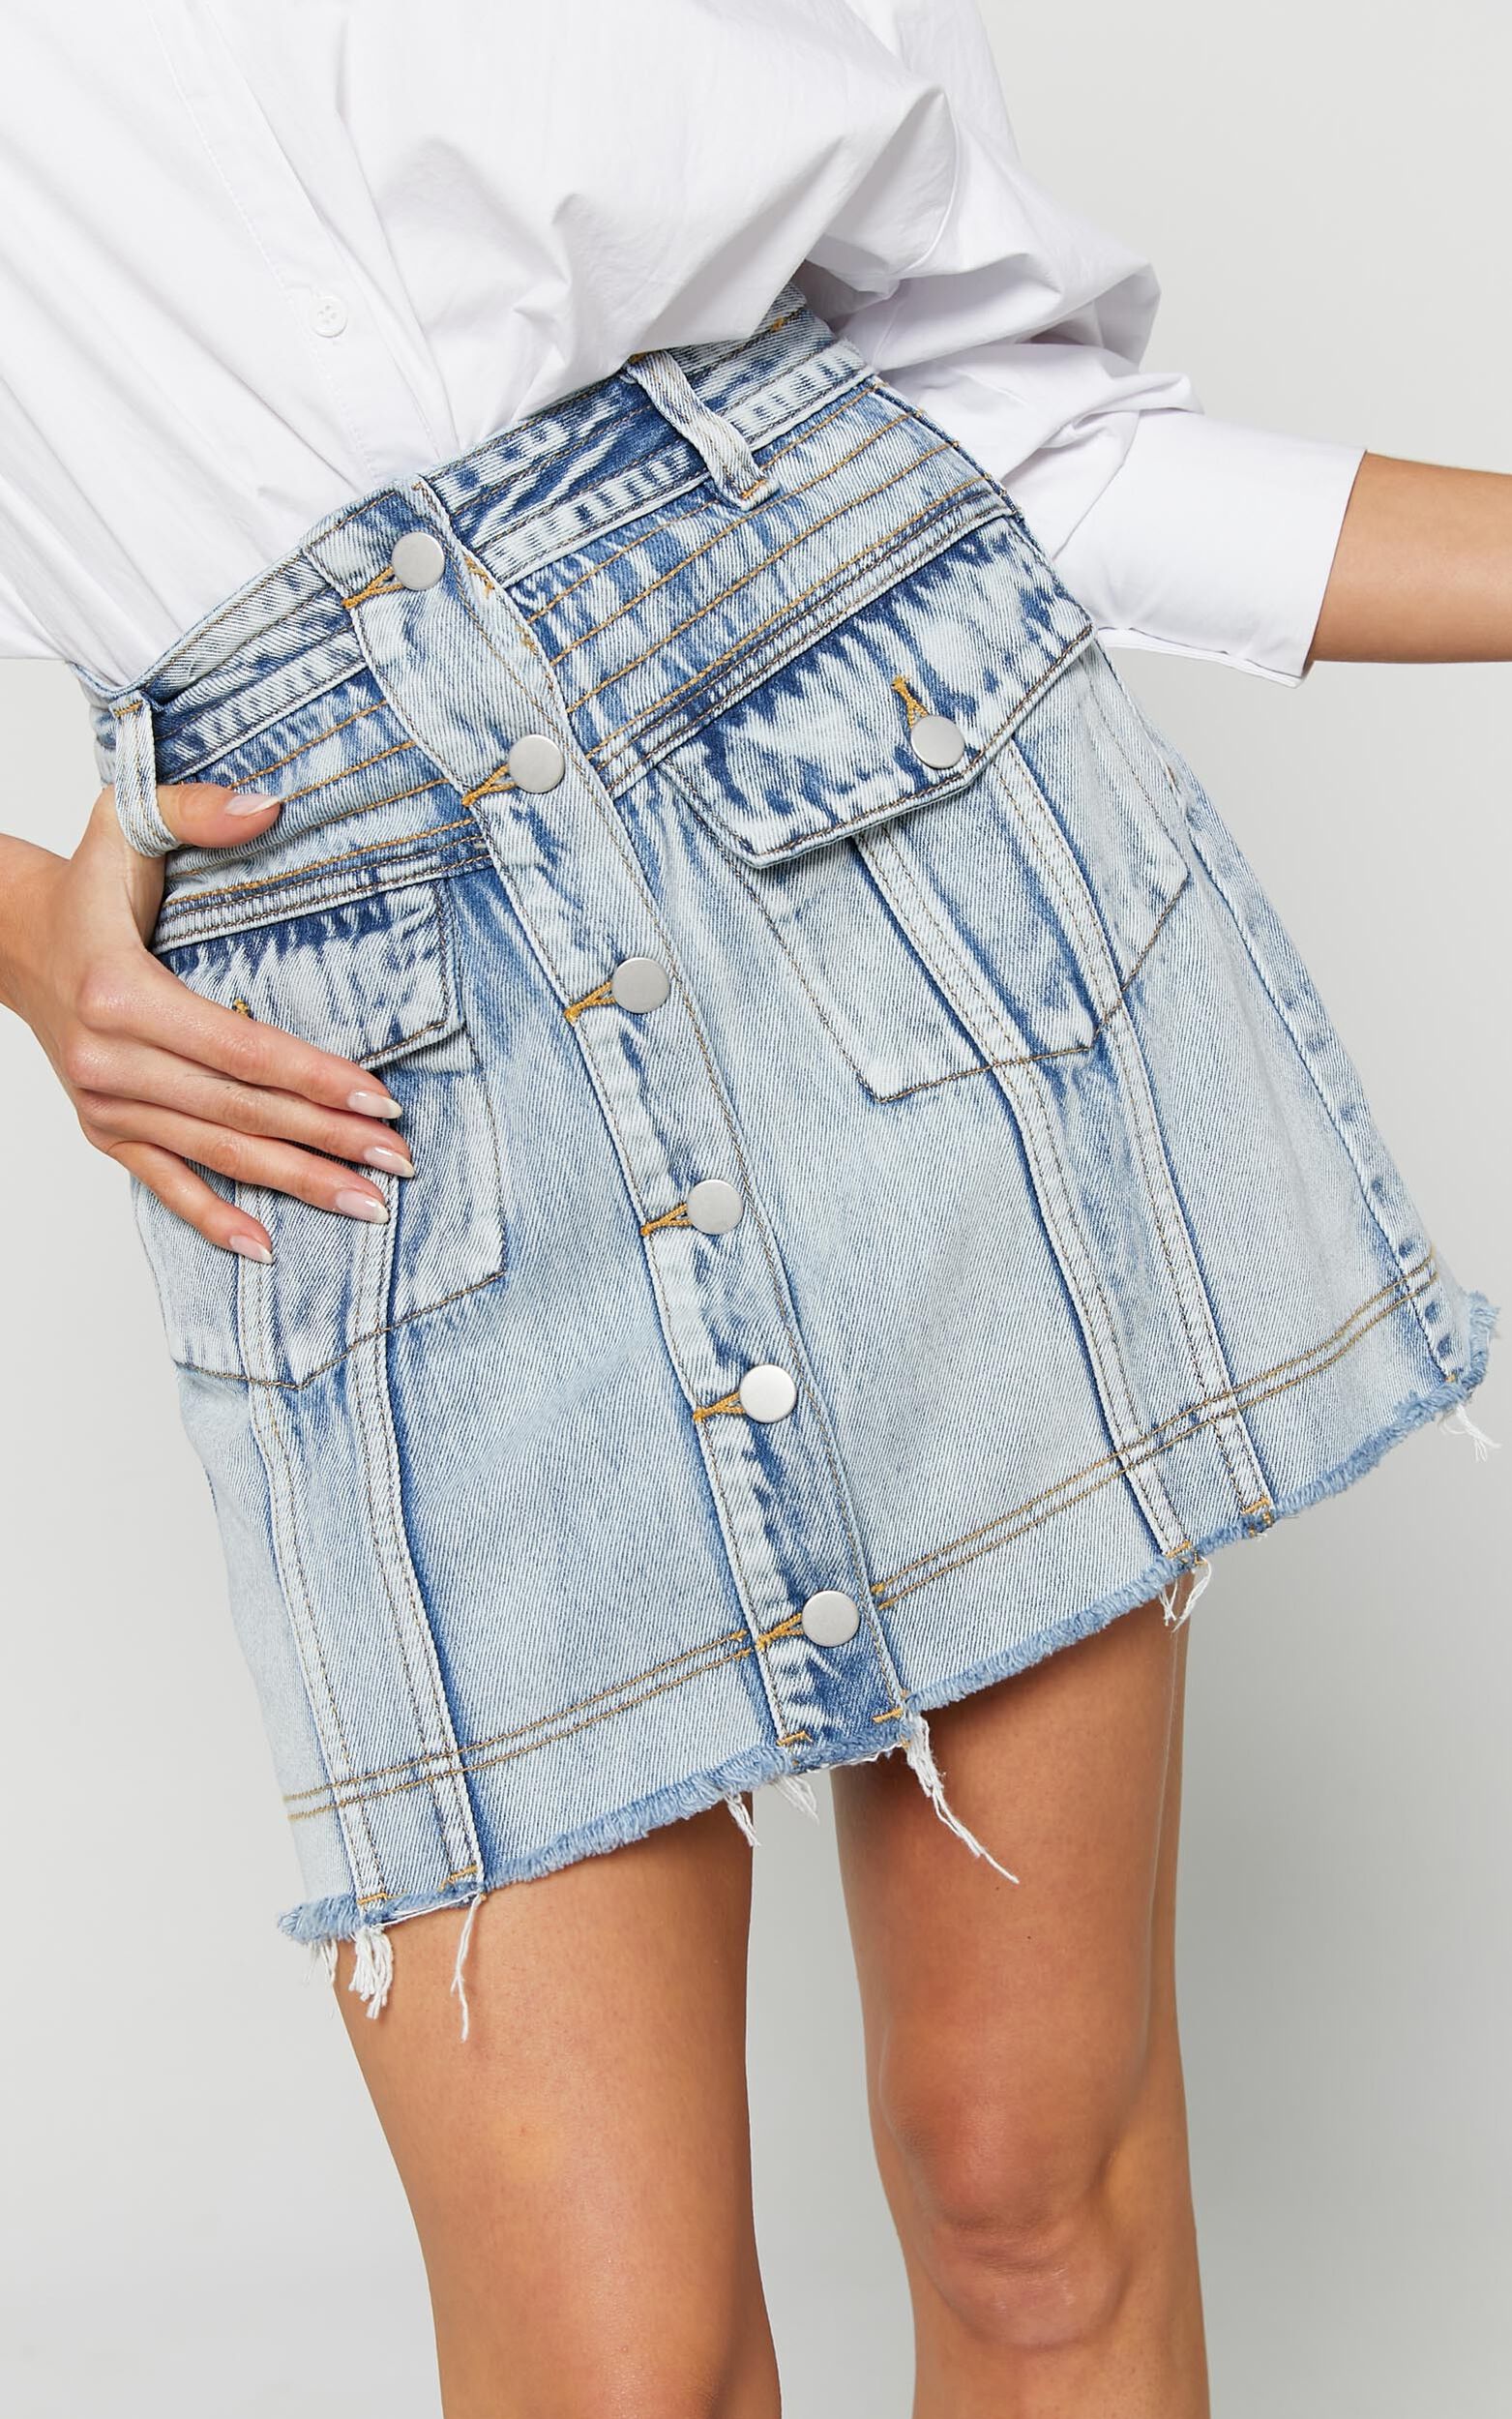 Gennlee Mini Skirt - Cotton Contrast Denim Skirt in Light Wash Blue |  Showpo USA